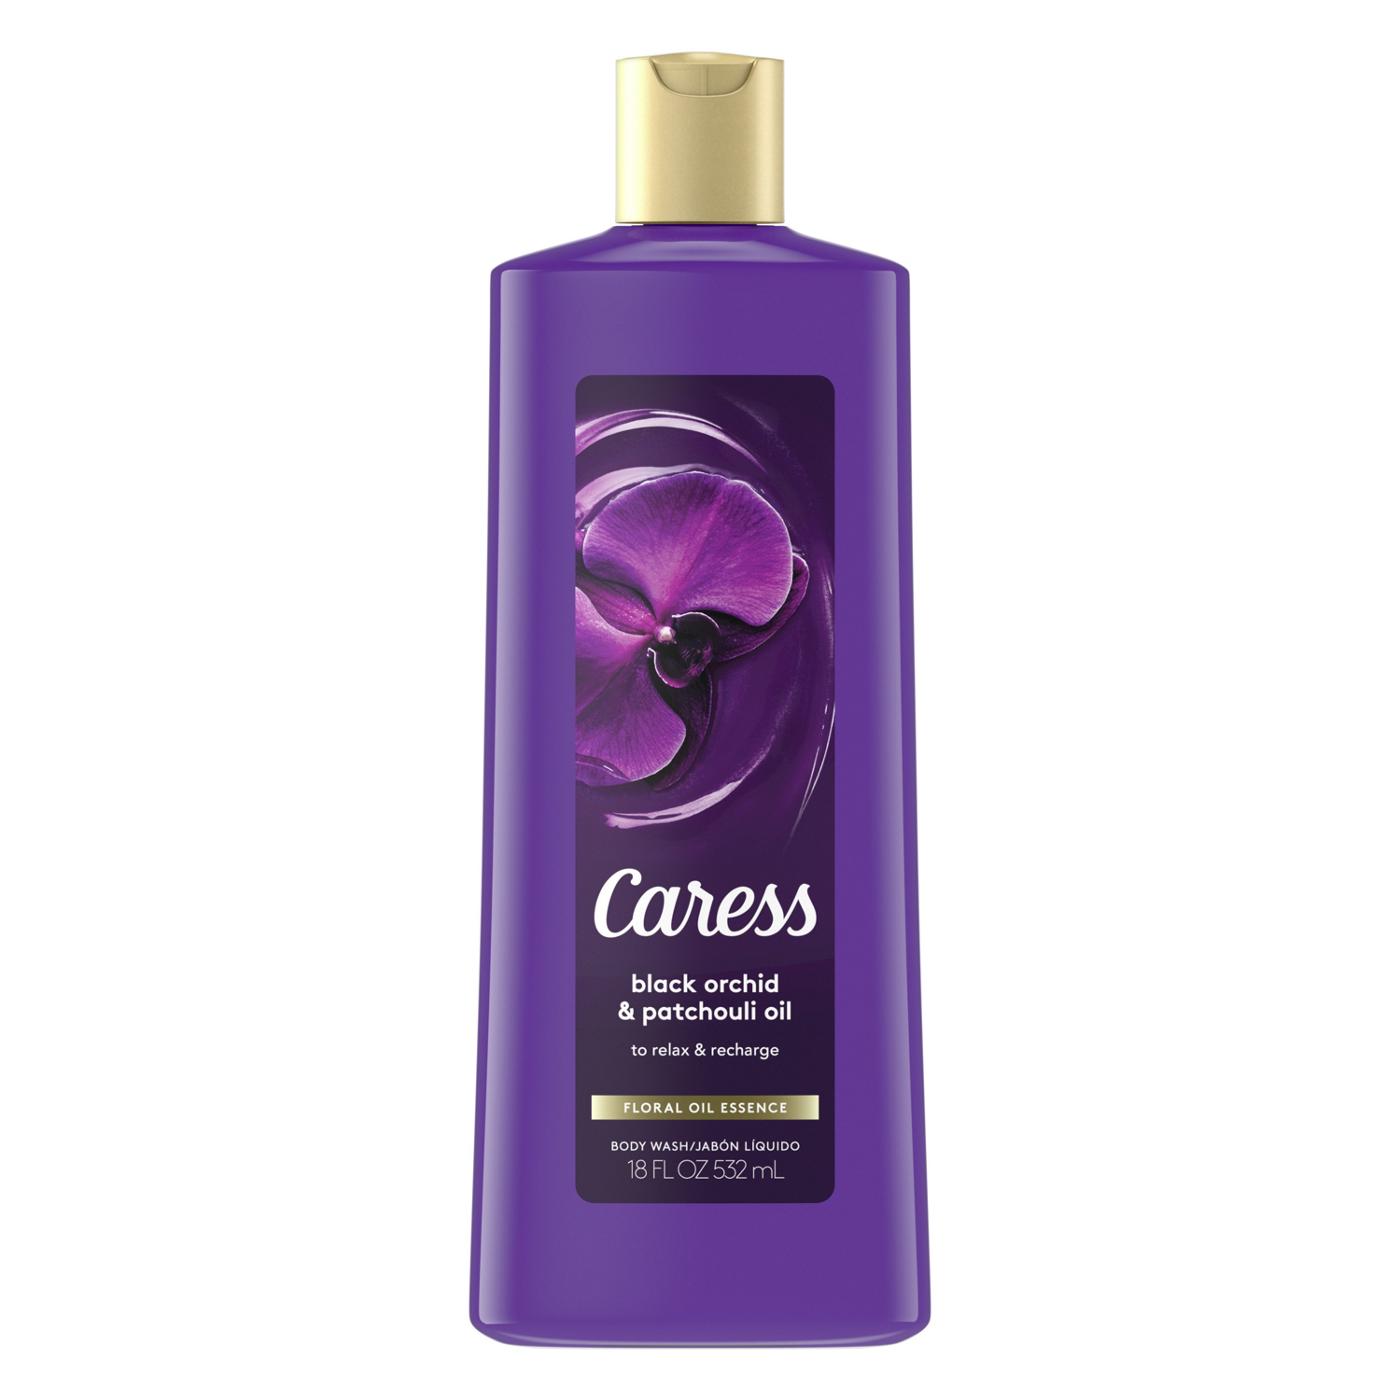 Caress Floral Oil Essence Body Wash - Black Orchid & Patchouli Oil; image 1 of 5